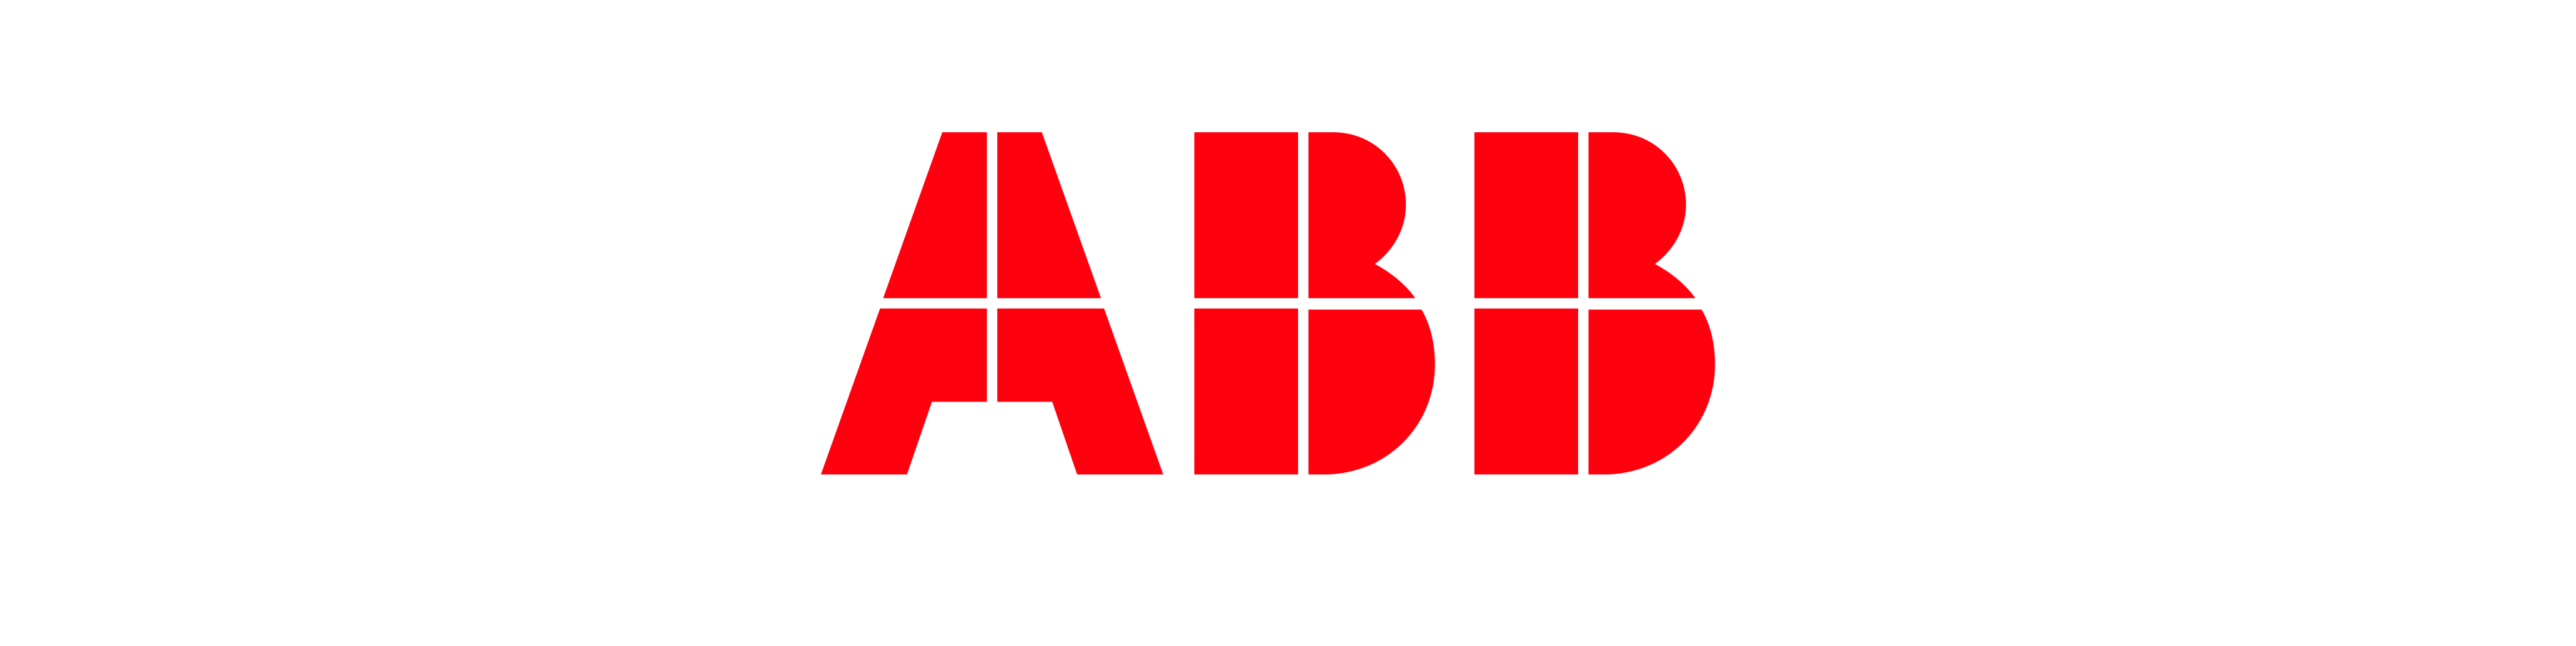 ABB golden hermez